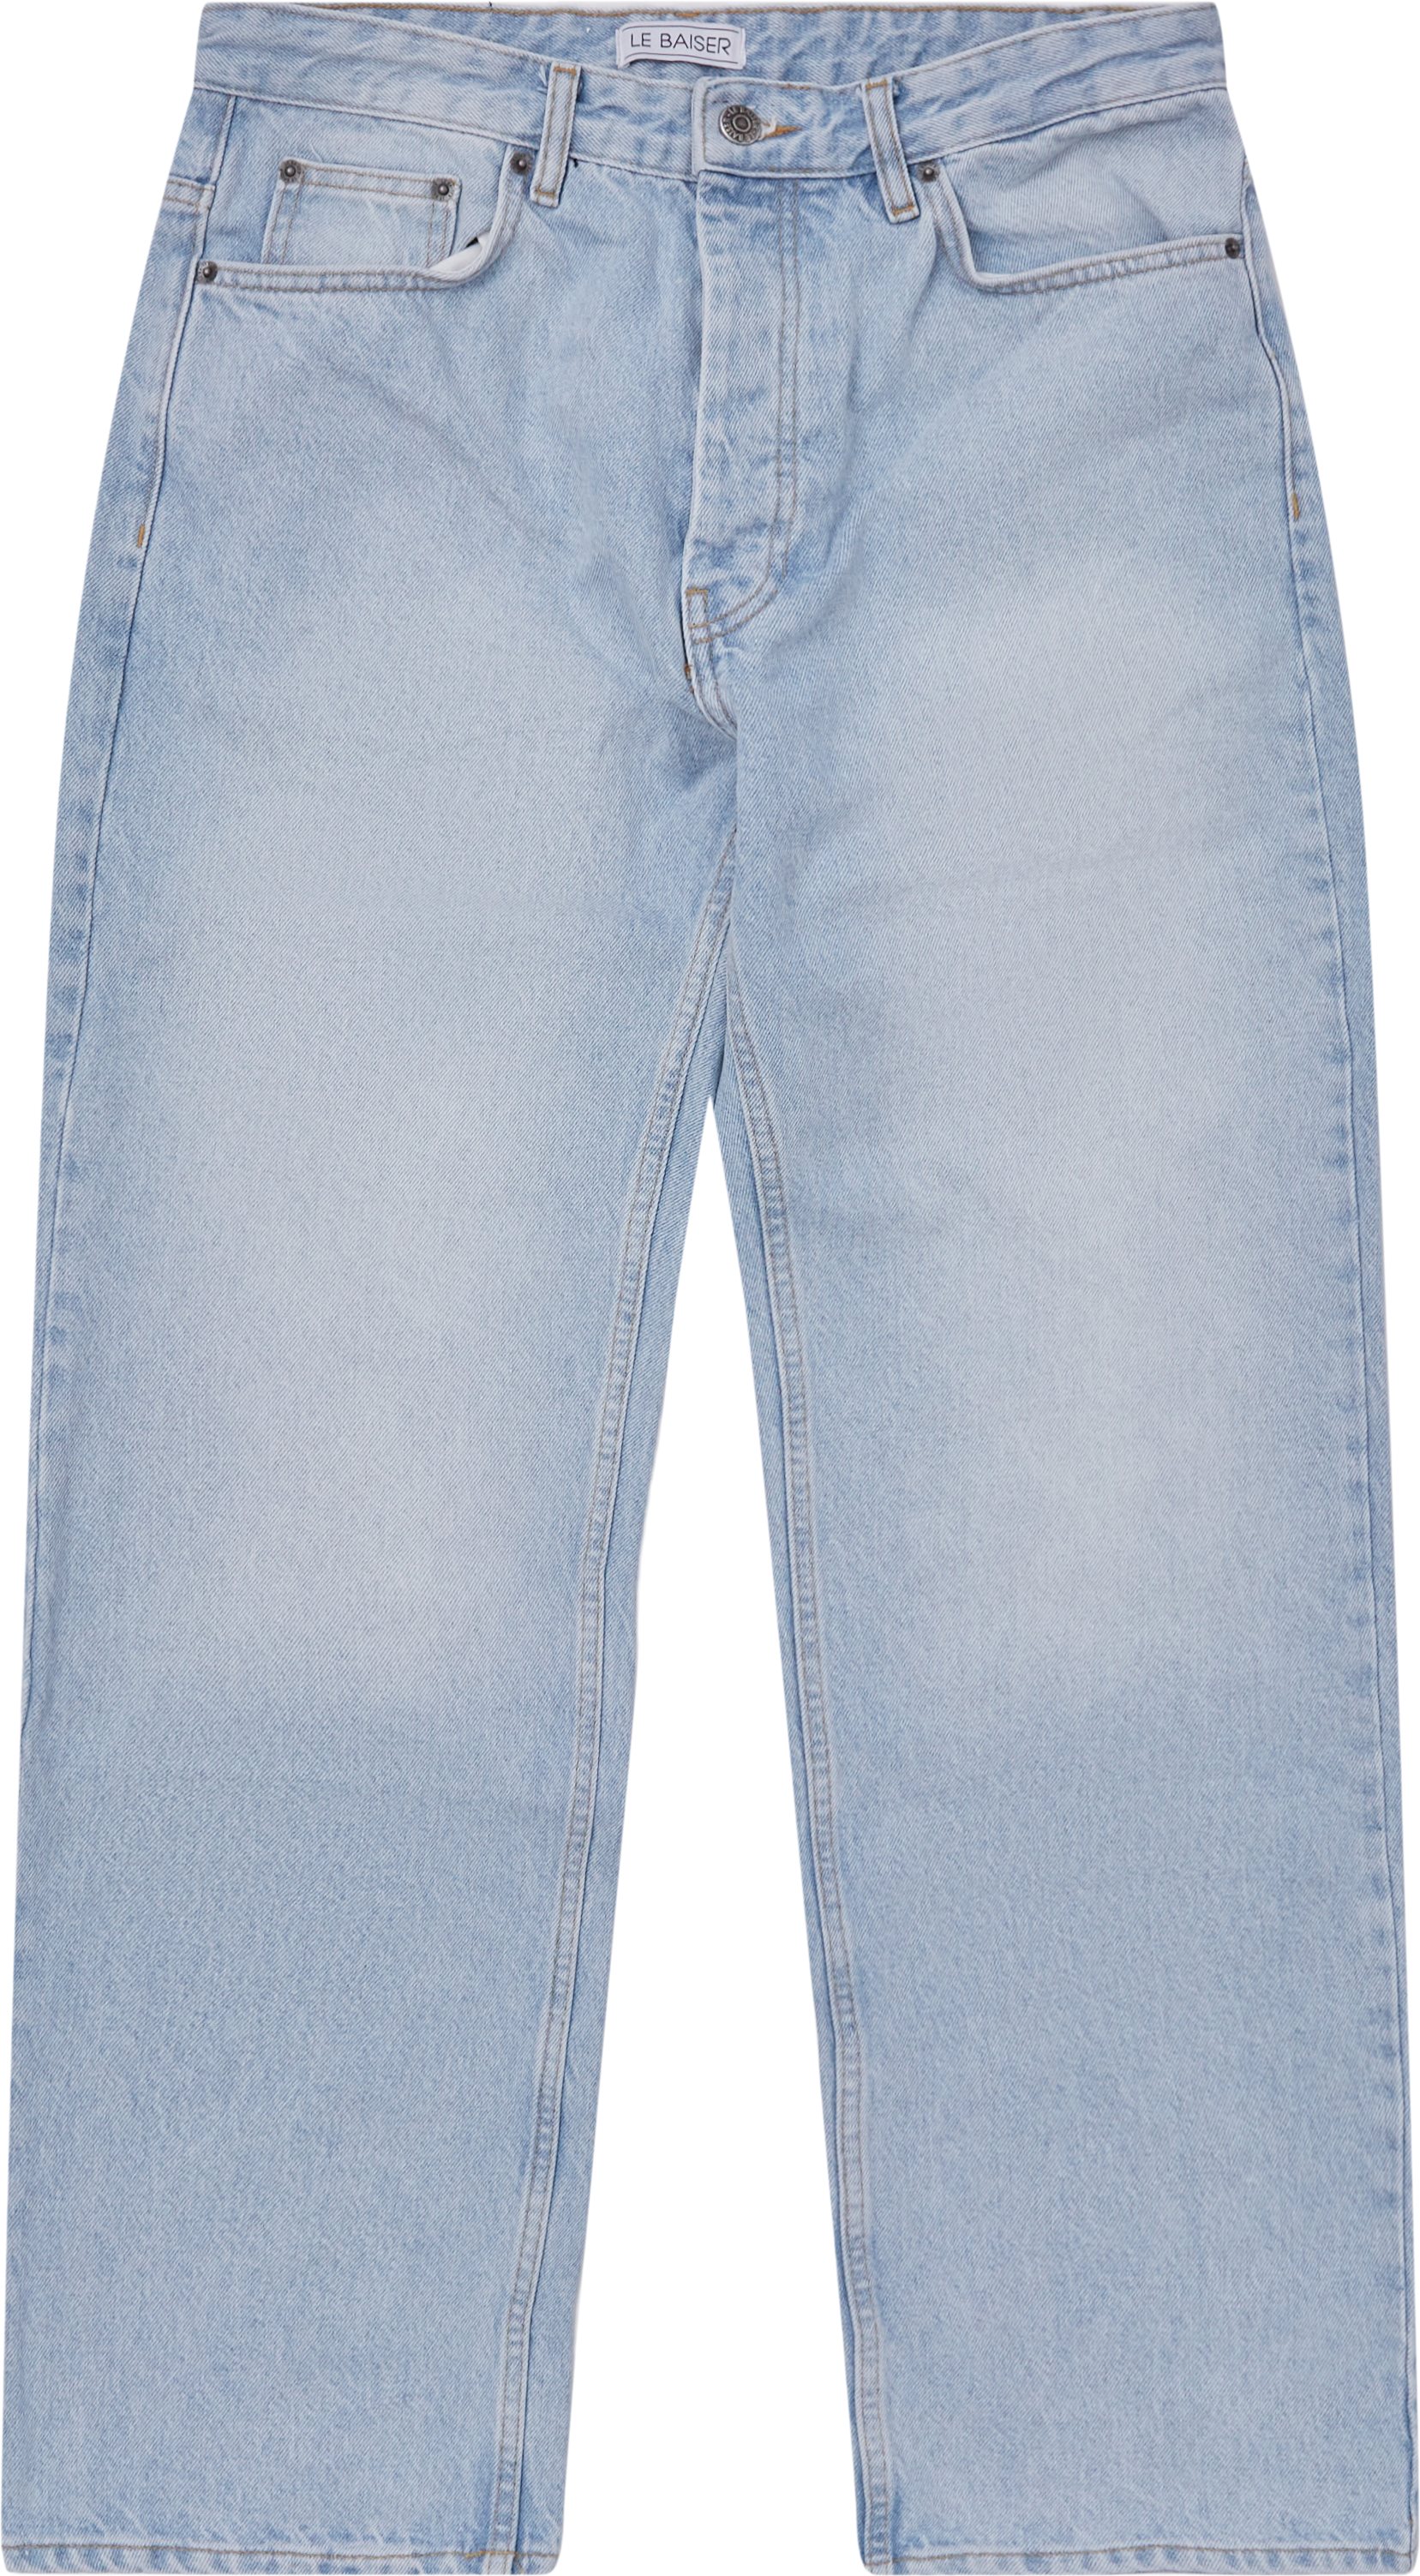 Colmar Clear Blue Jeans - Jeans - Loose fit - Denim